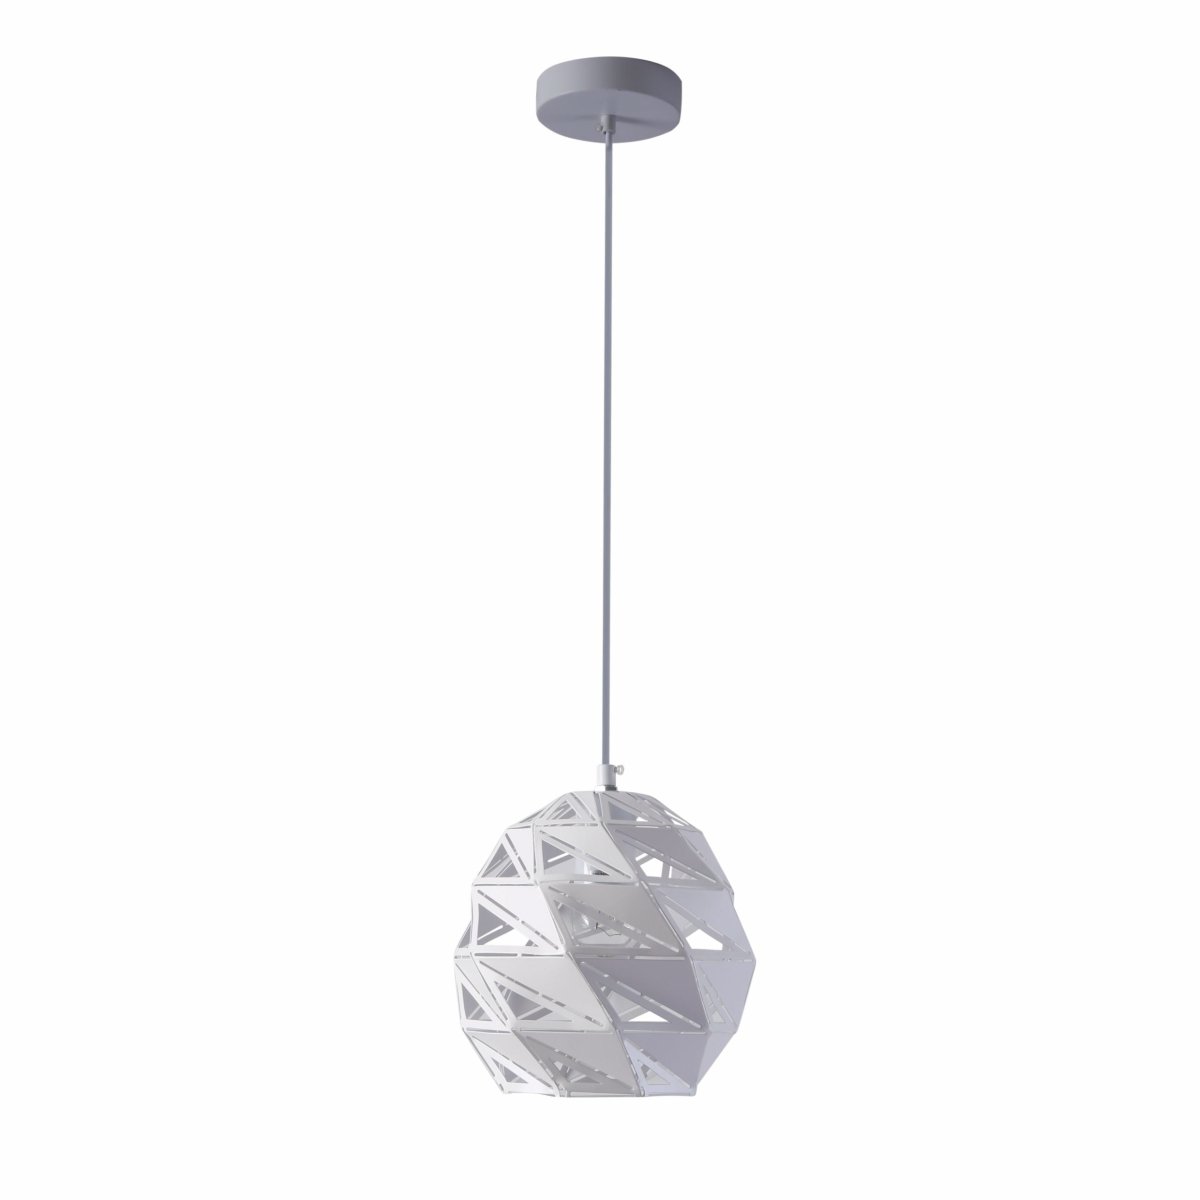 Main image of White Metal Laser Cut Globe Pendant Light Small with E27 Fitting | TEKLED 150-18269